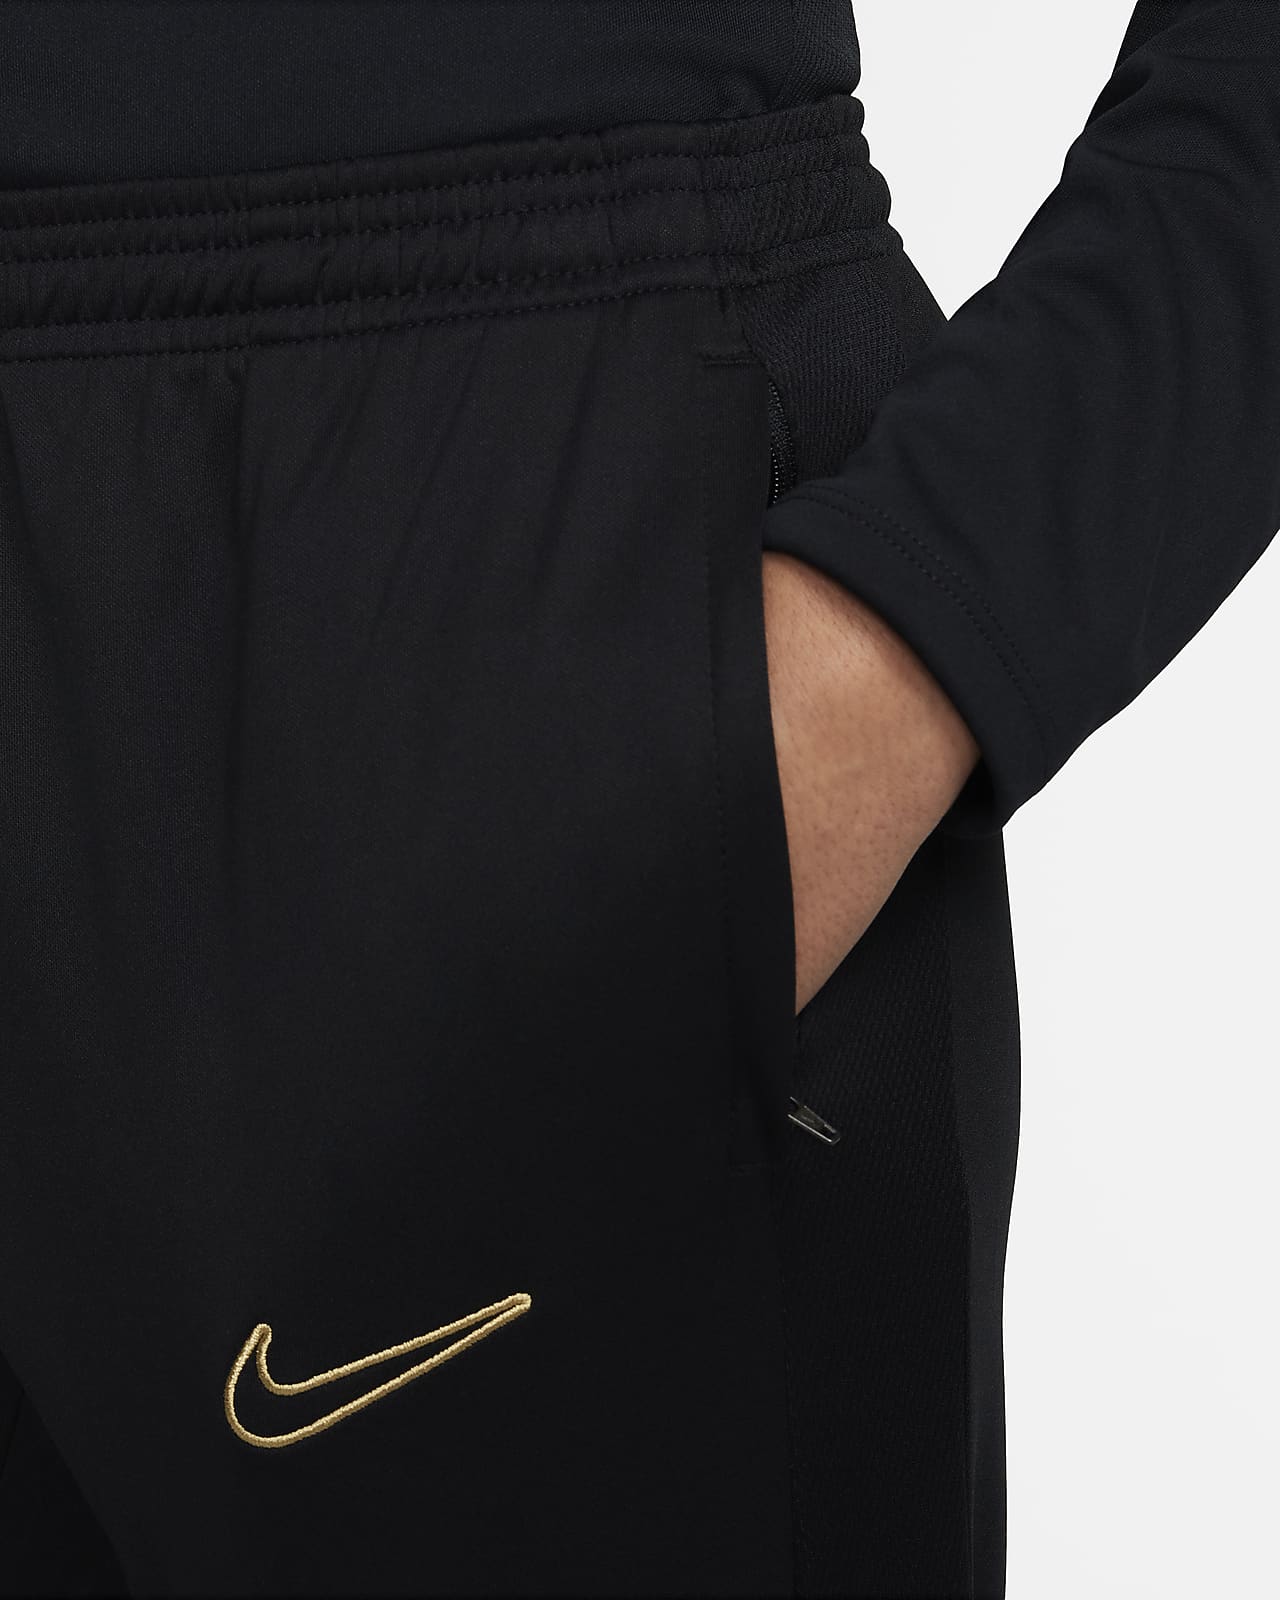 Nike Womens Dri-FIT Academy Football Pants Black XL